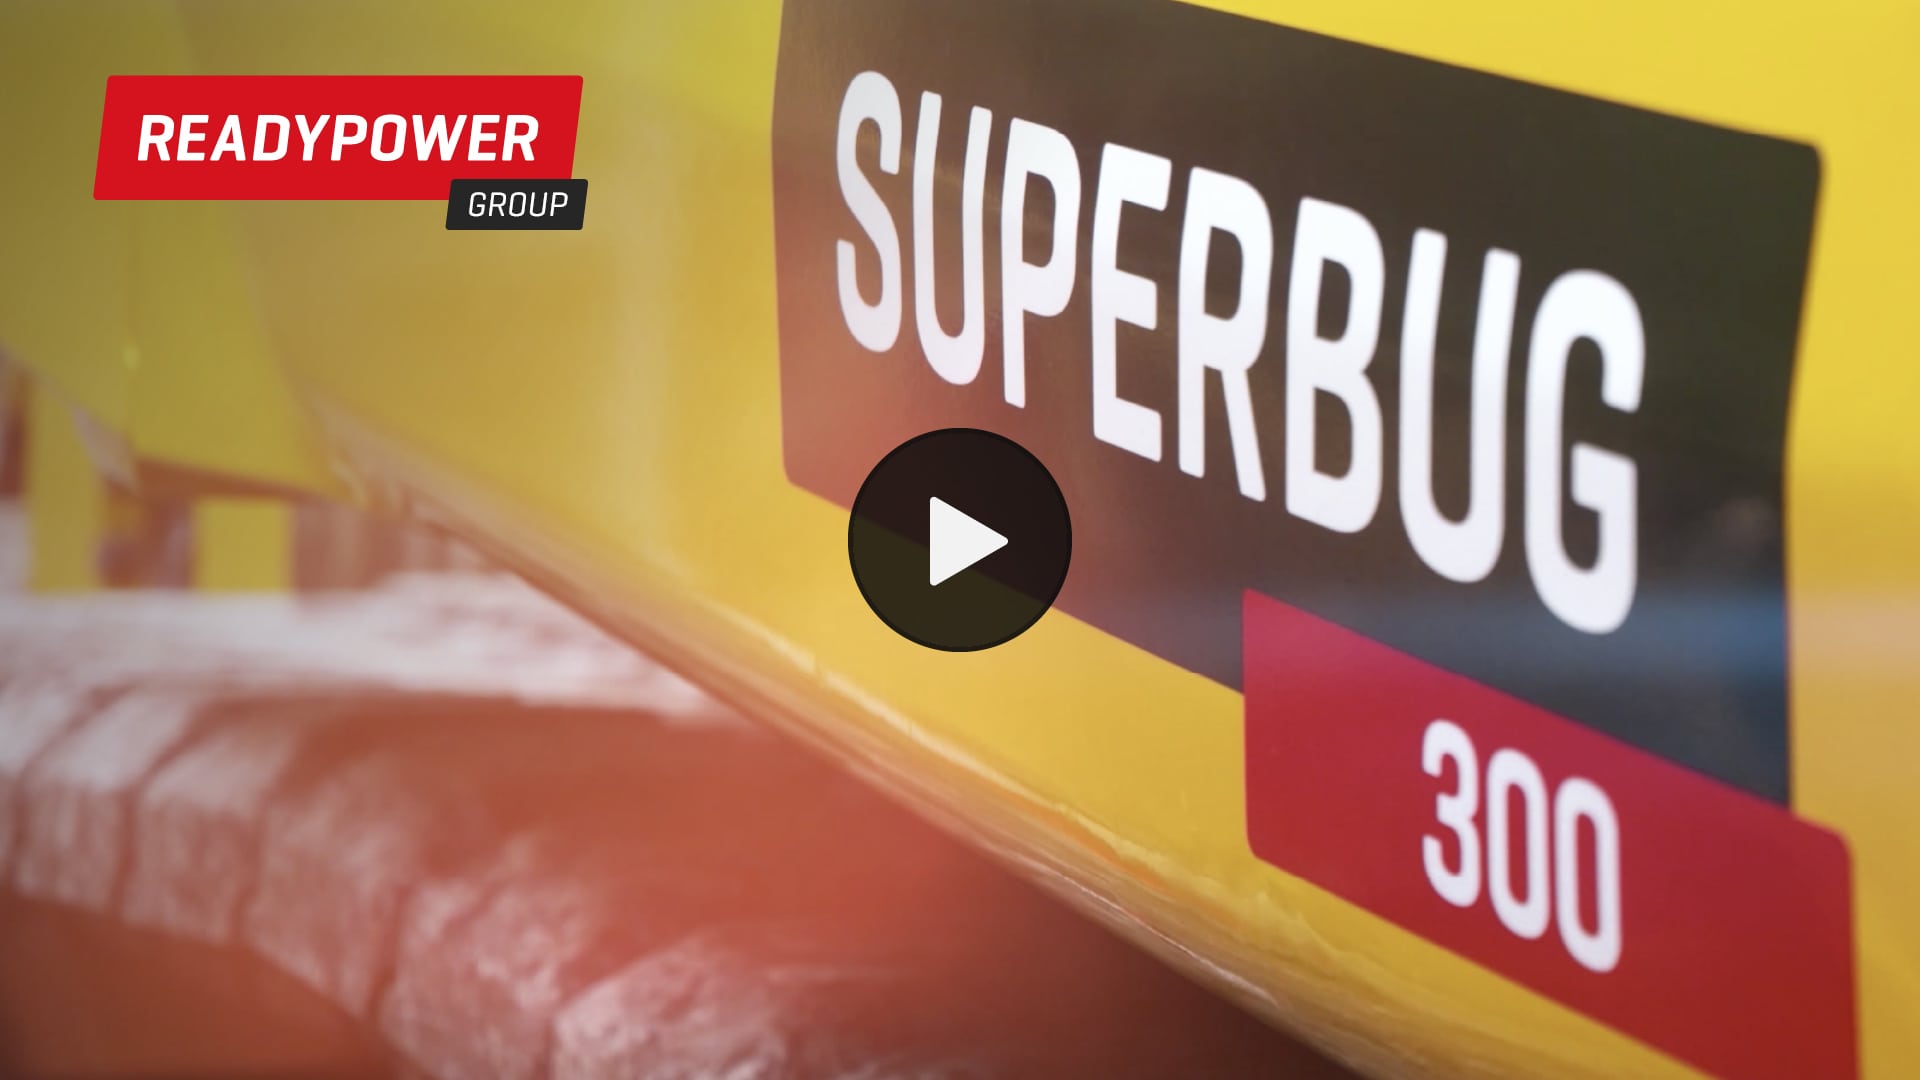 Introducing the SuperBug300